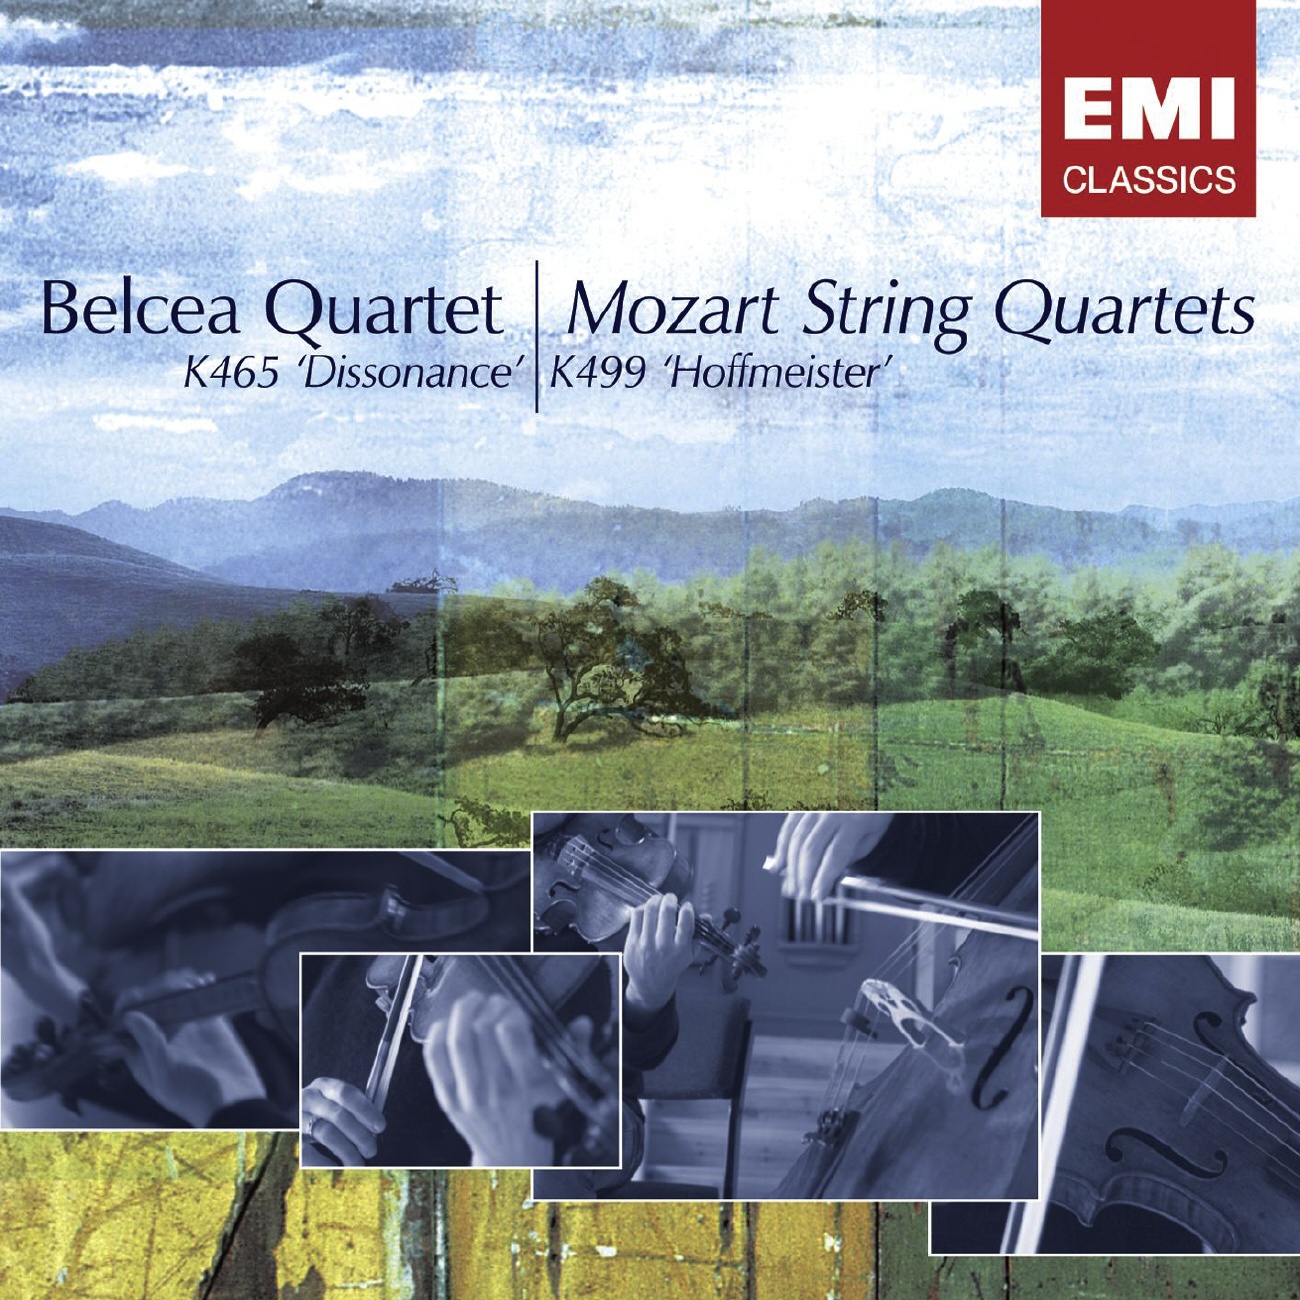 String Quartet in D major, K.499 (Hoffmeister): II.   Menuetto. Allegretto - Trio